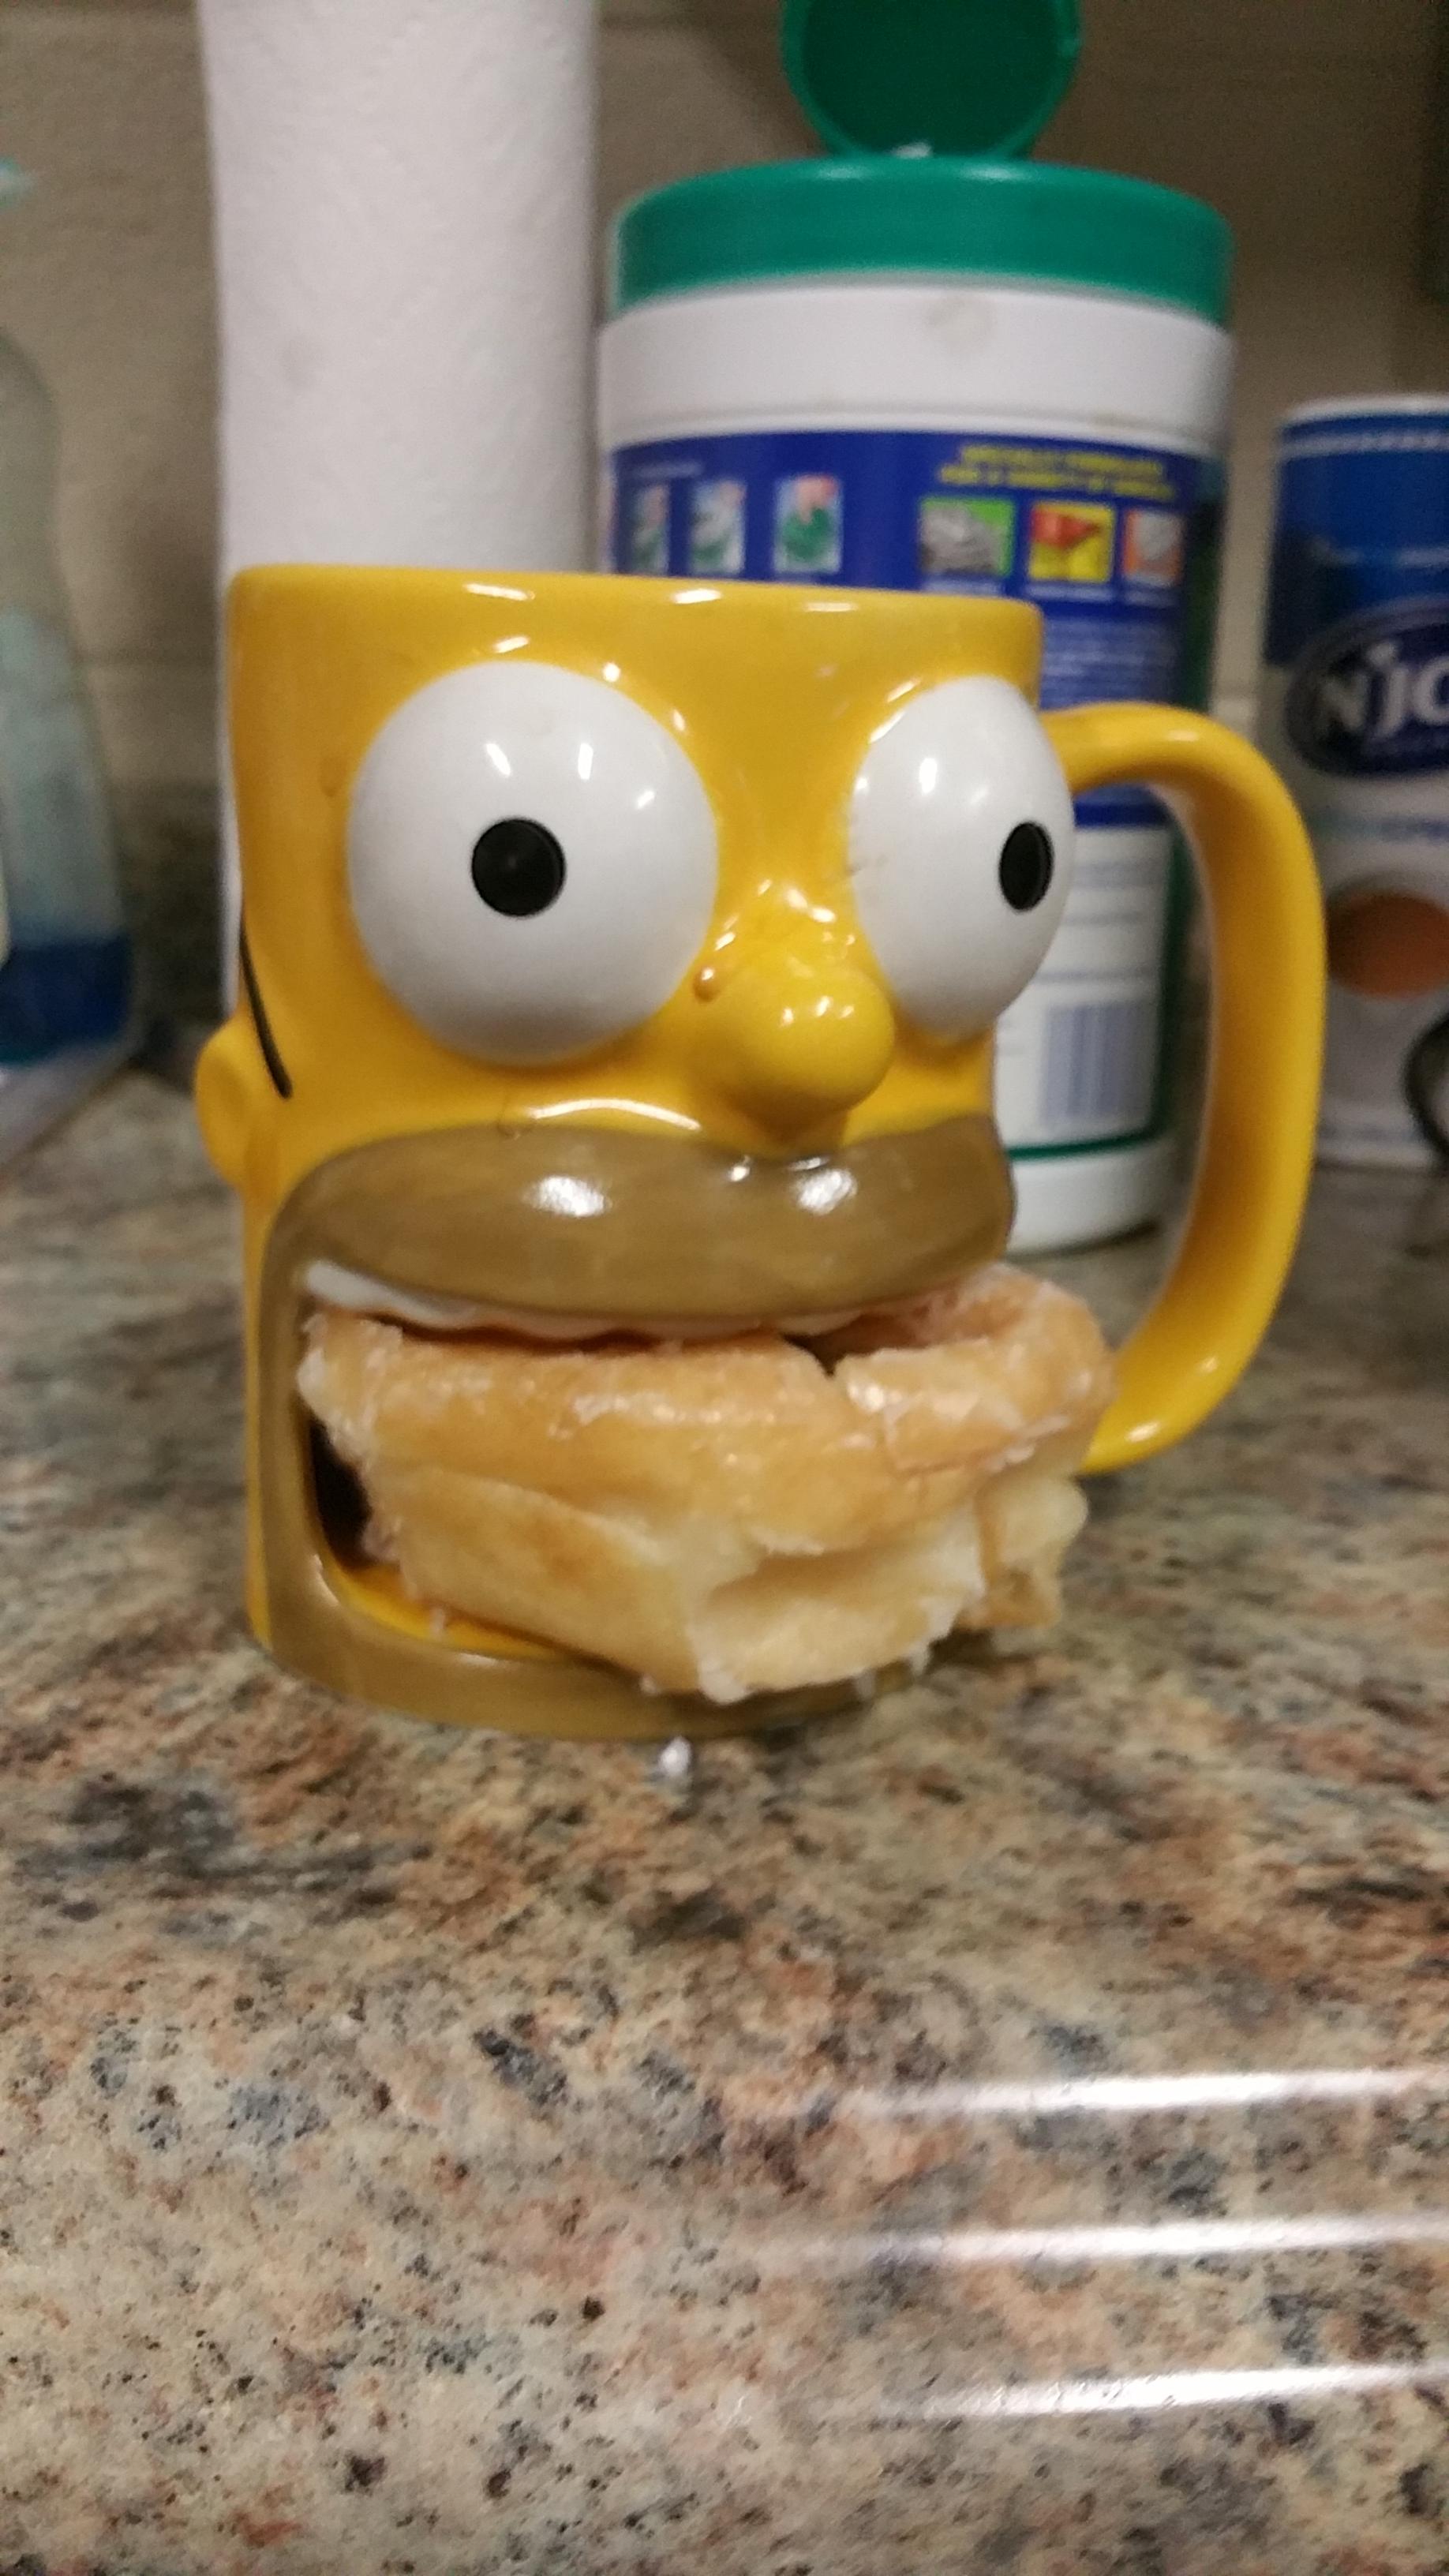 My coworker’s coffee mug holds a donut.